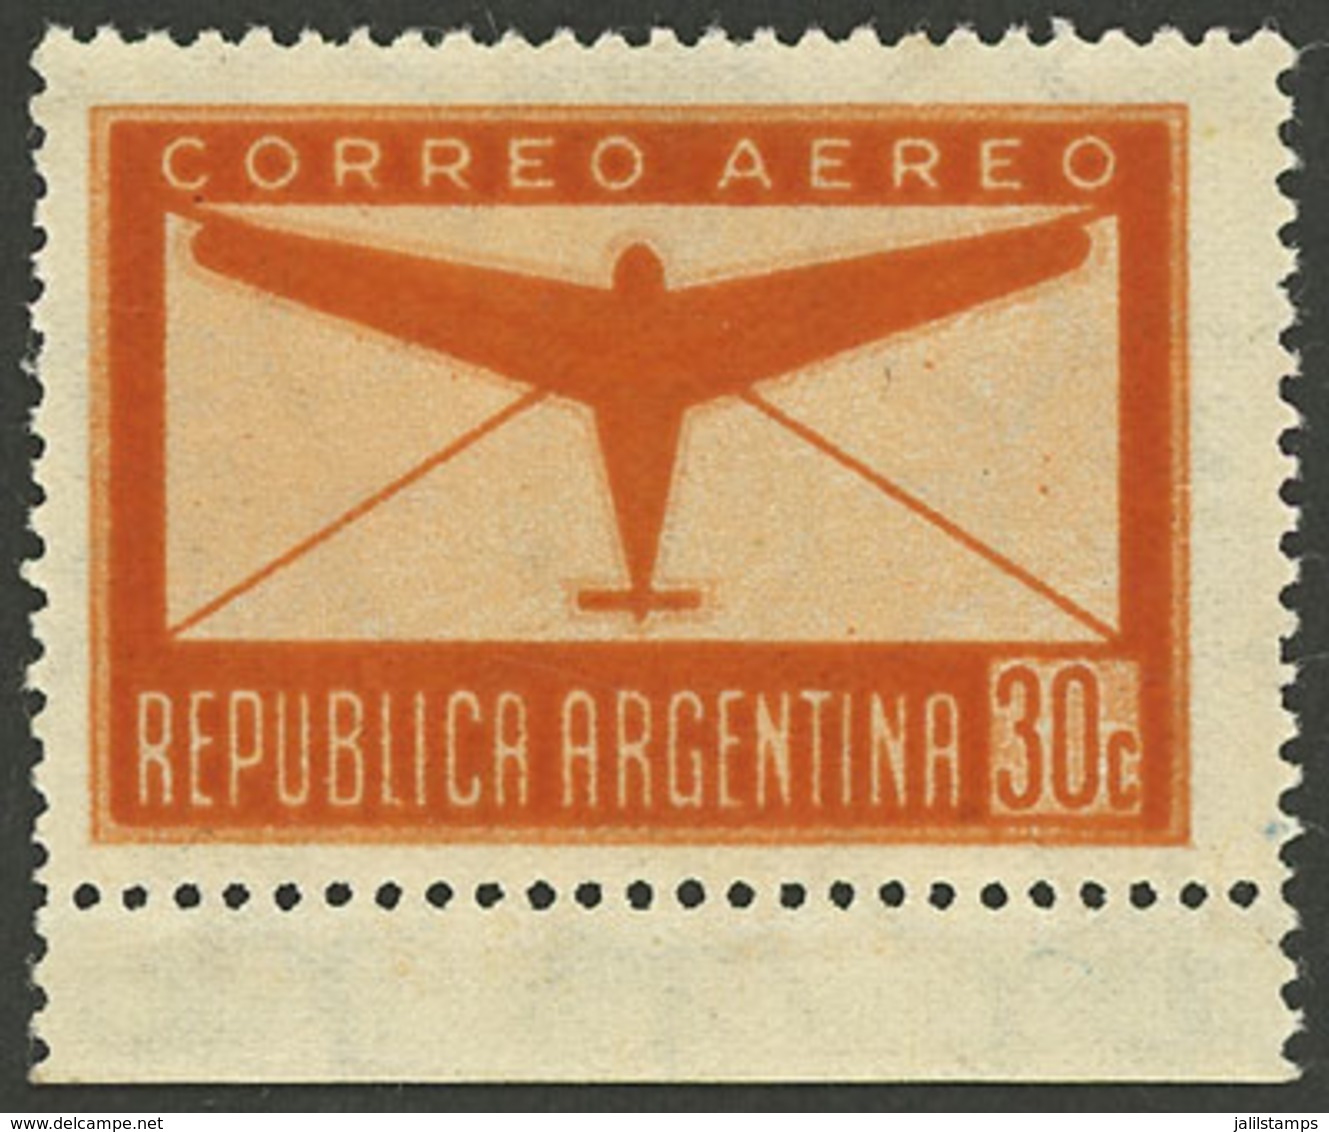 ARGENTINA: GJ.845SG, 1940 30c. Stylized Airplane, PRINTED ON GUM Variety, VF, Scarce! - Posta Aerea